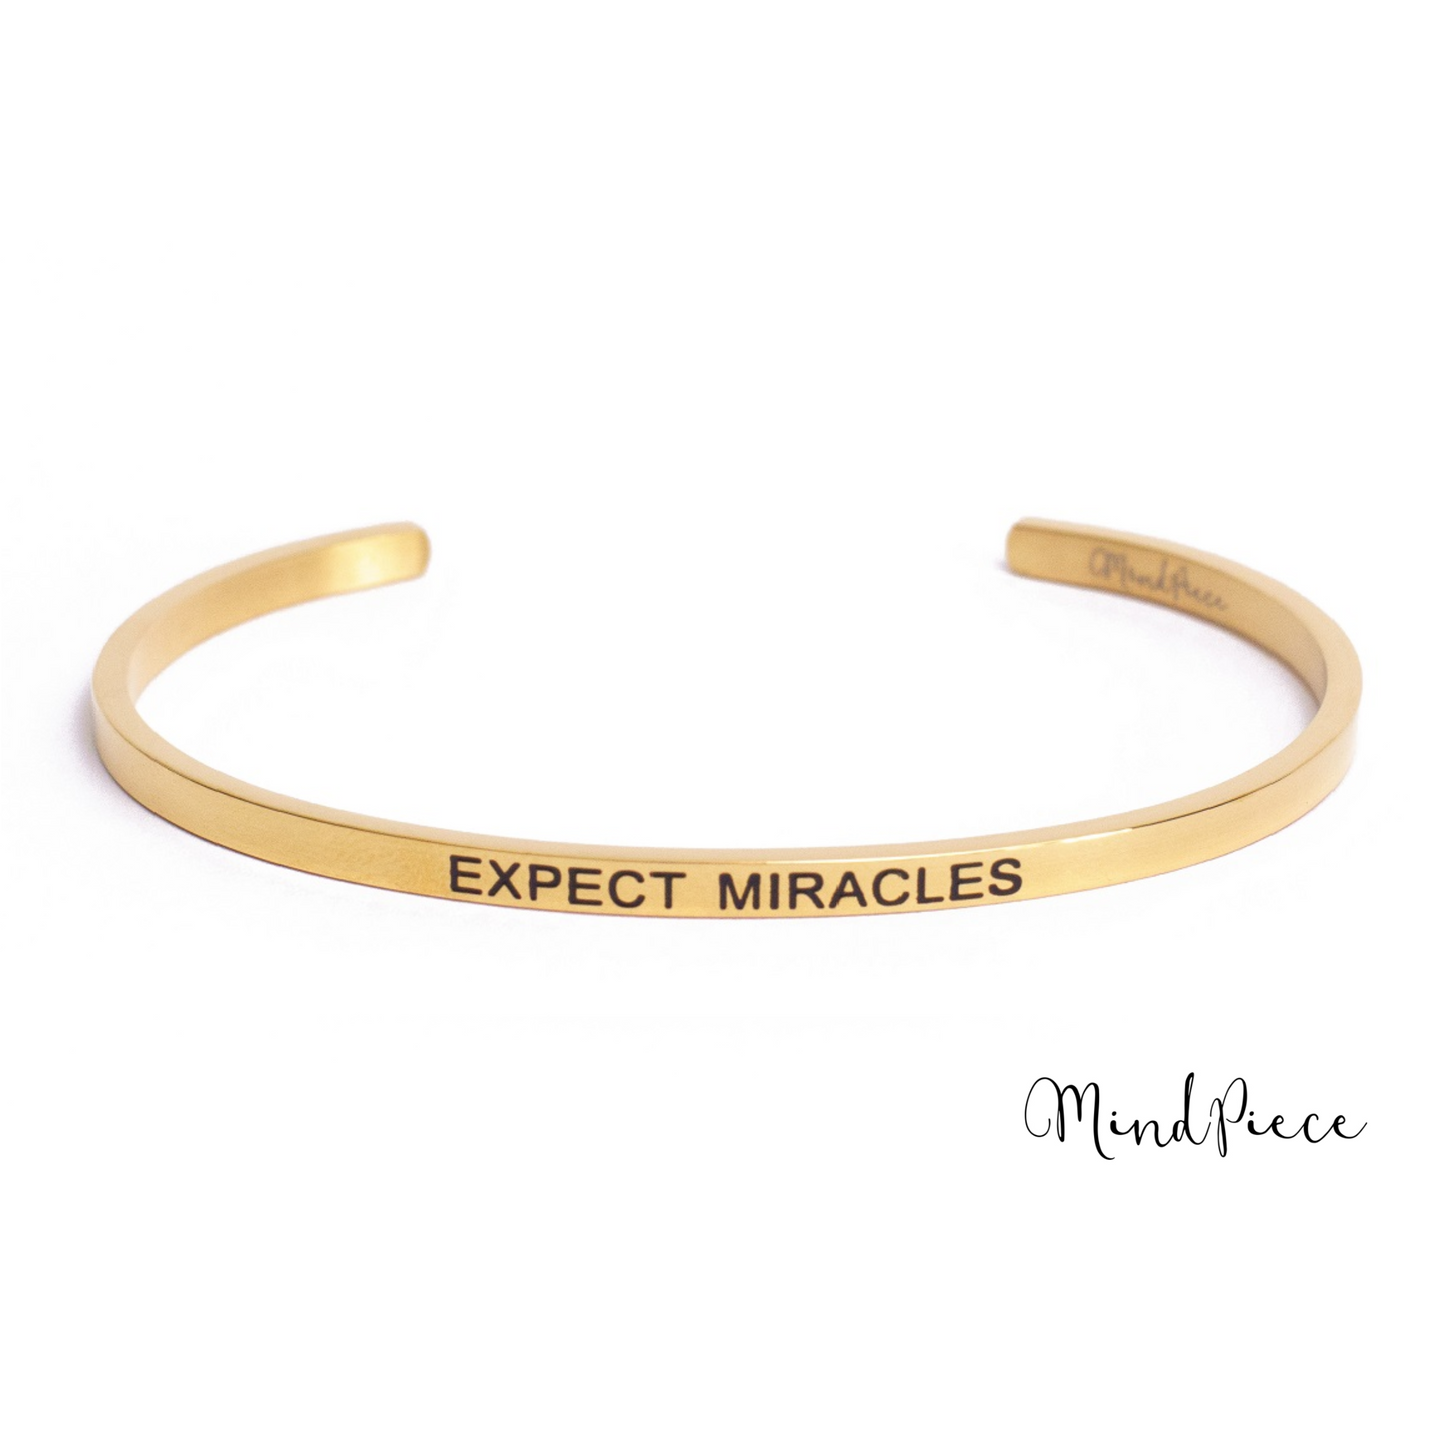 Quote Bracelet - Expect miracles (1pcs)